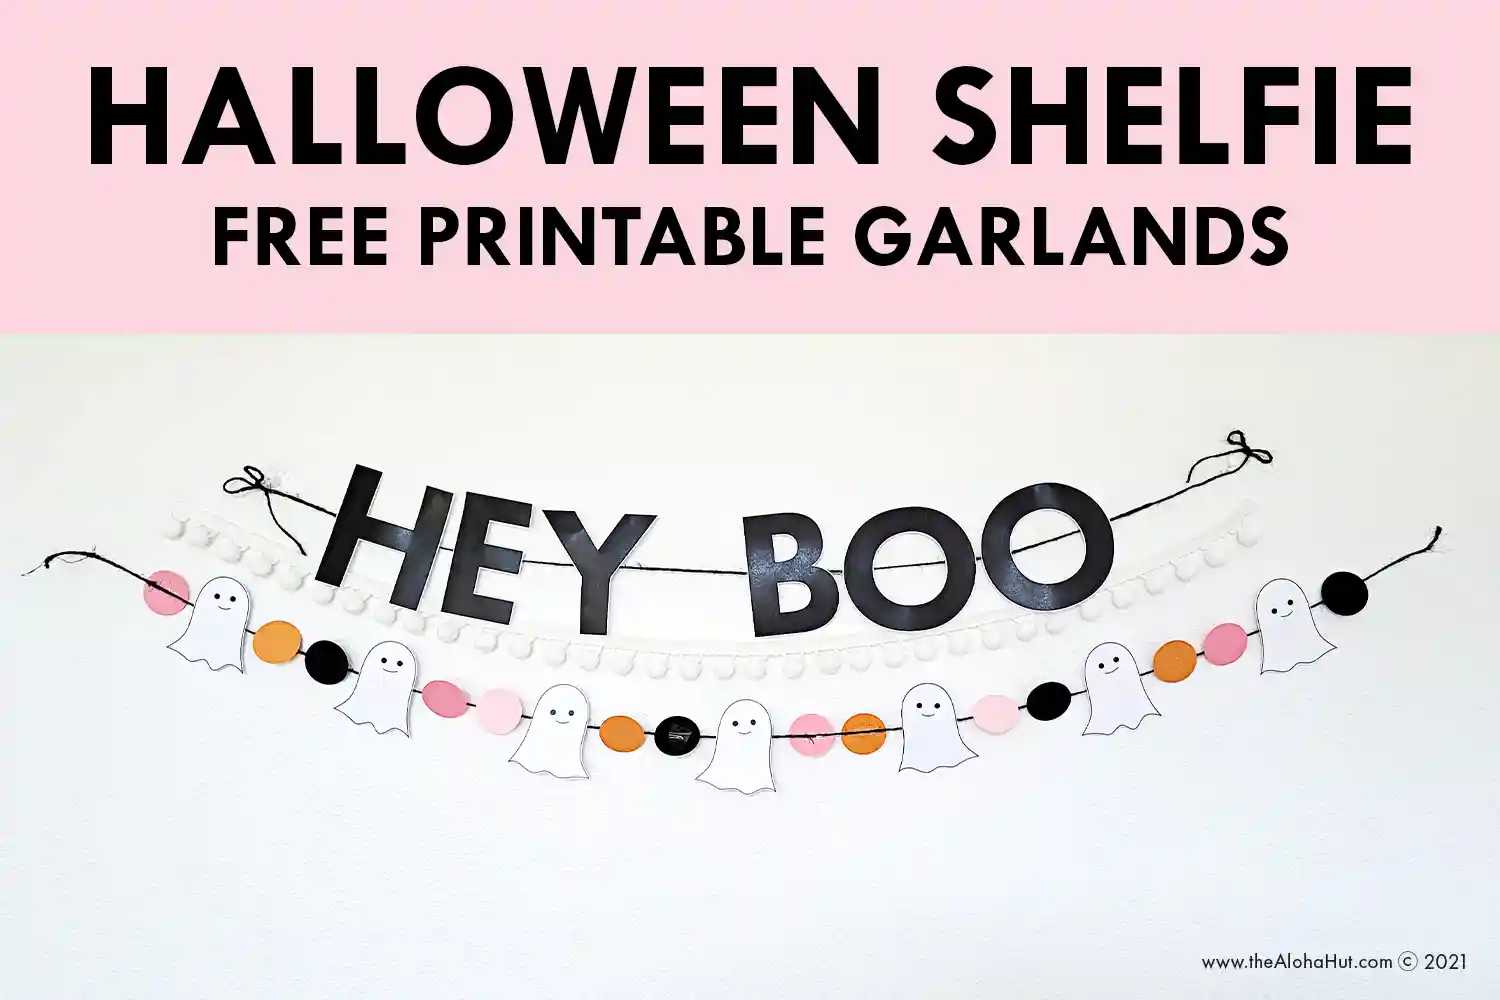 Halloween Shelfie - free printable Halloween prints decor